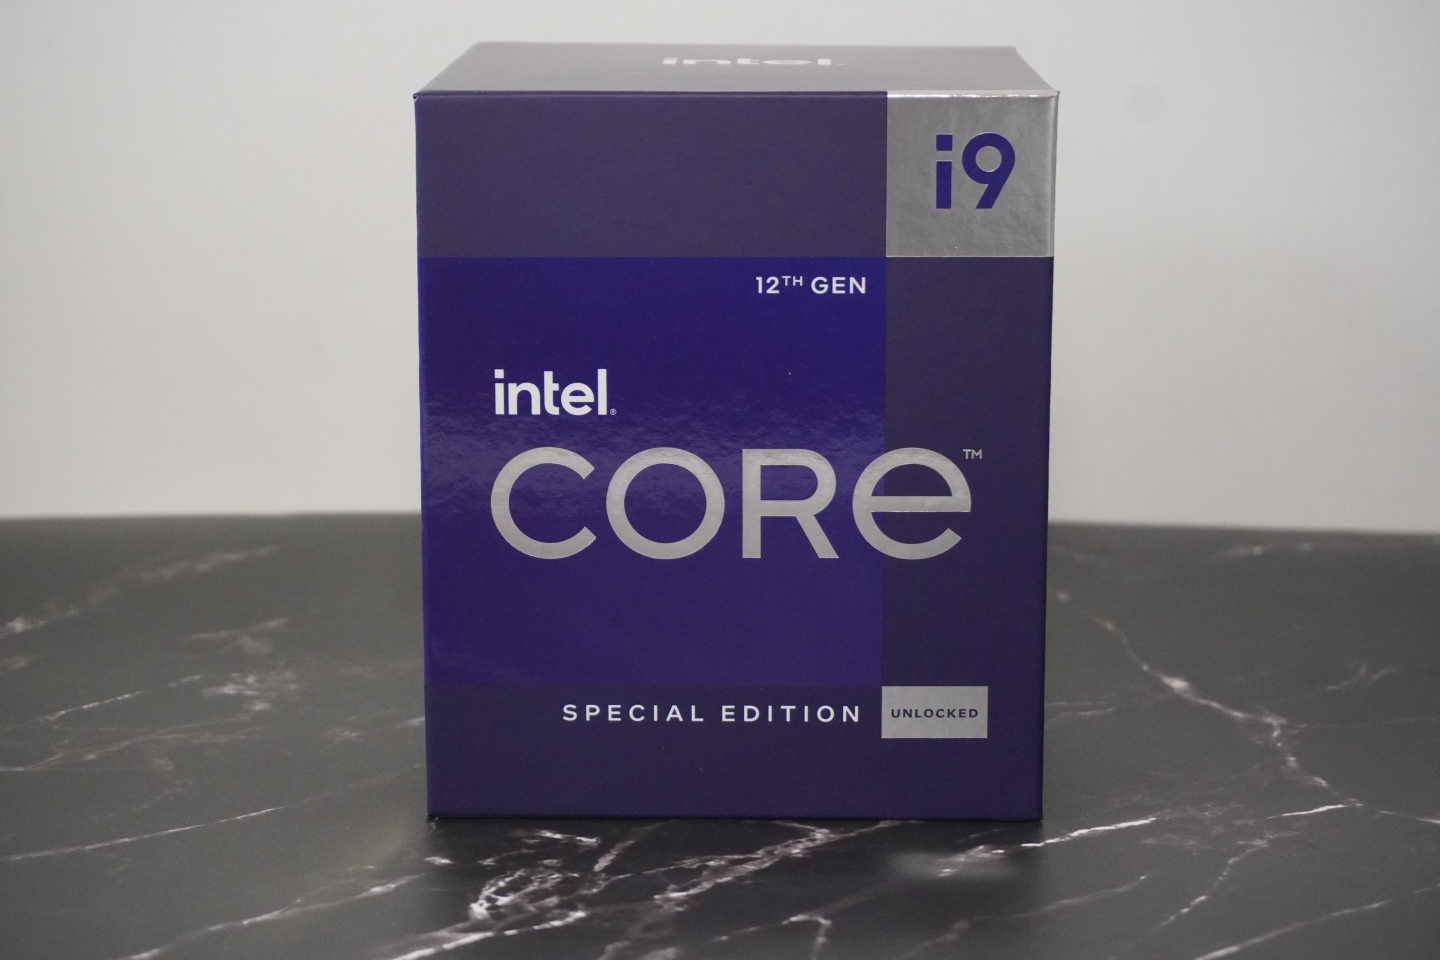 Core i9-12900KS的包裝與Core i9-12900K相當接近，但多出「Special Edition」特別版的文標示。